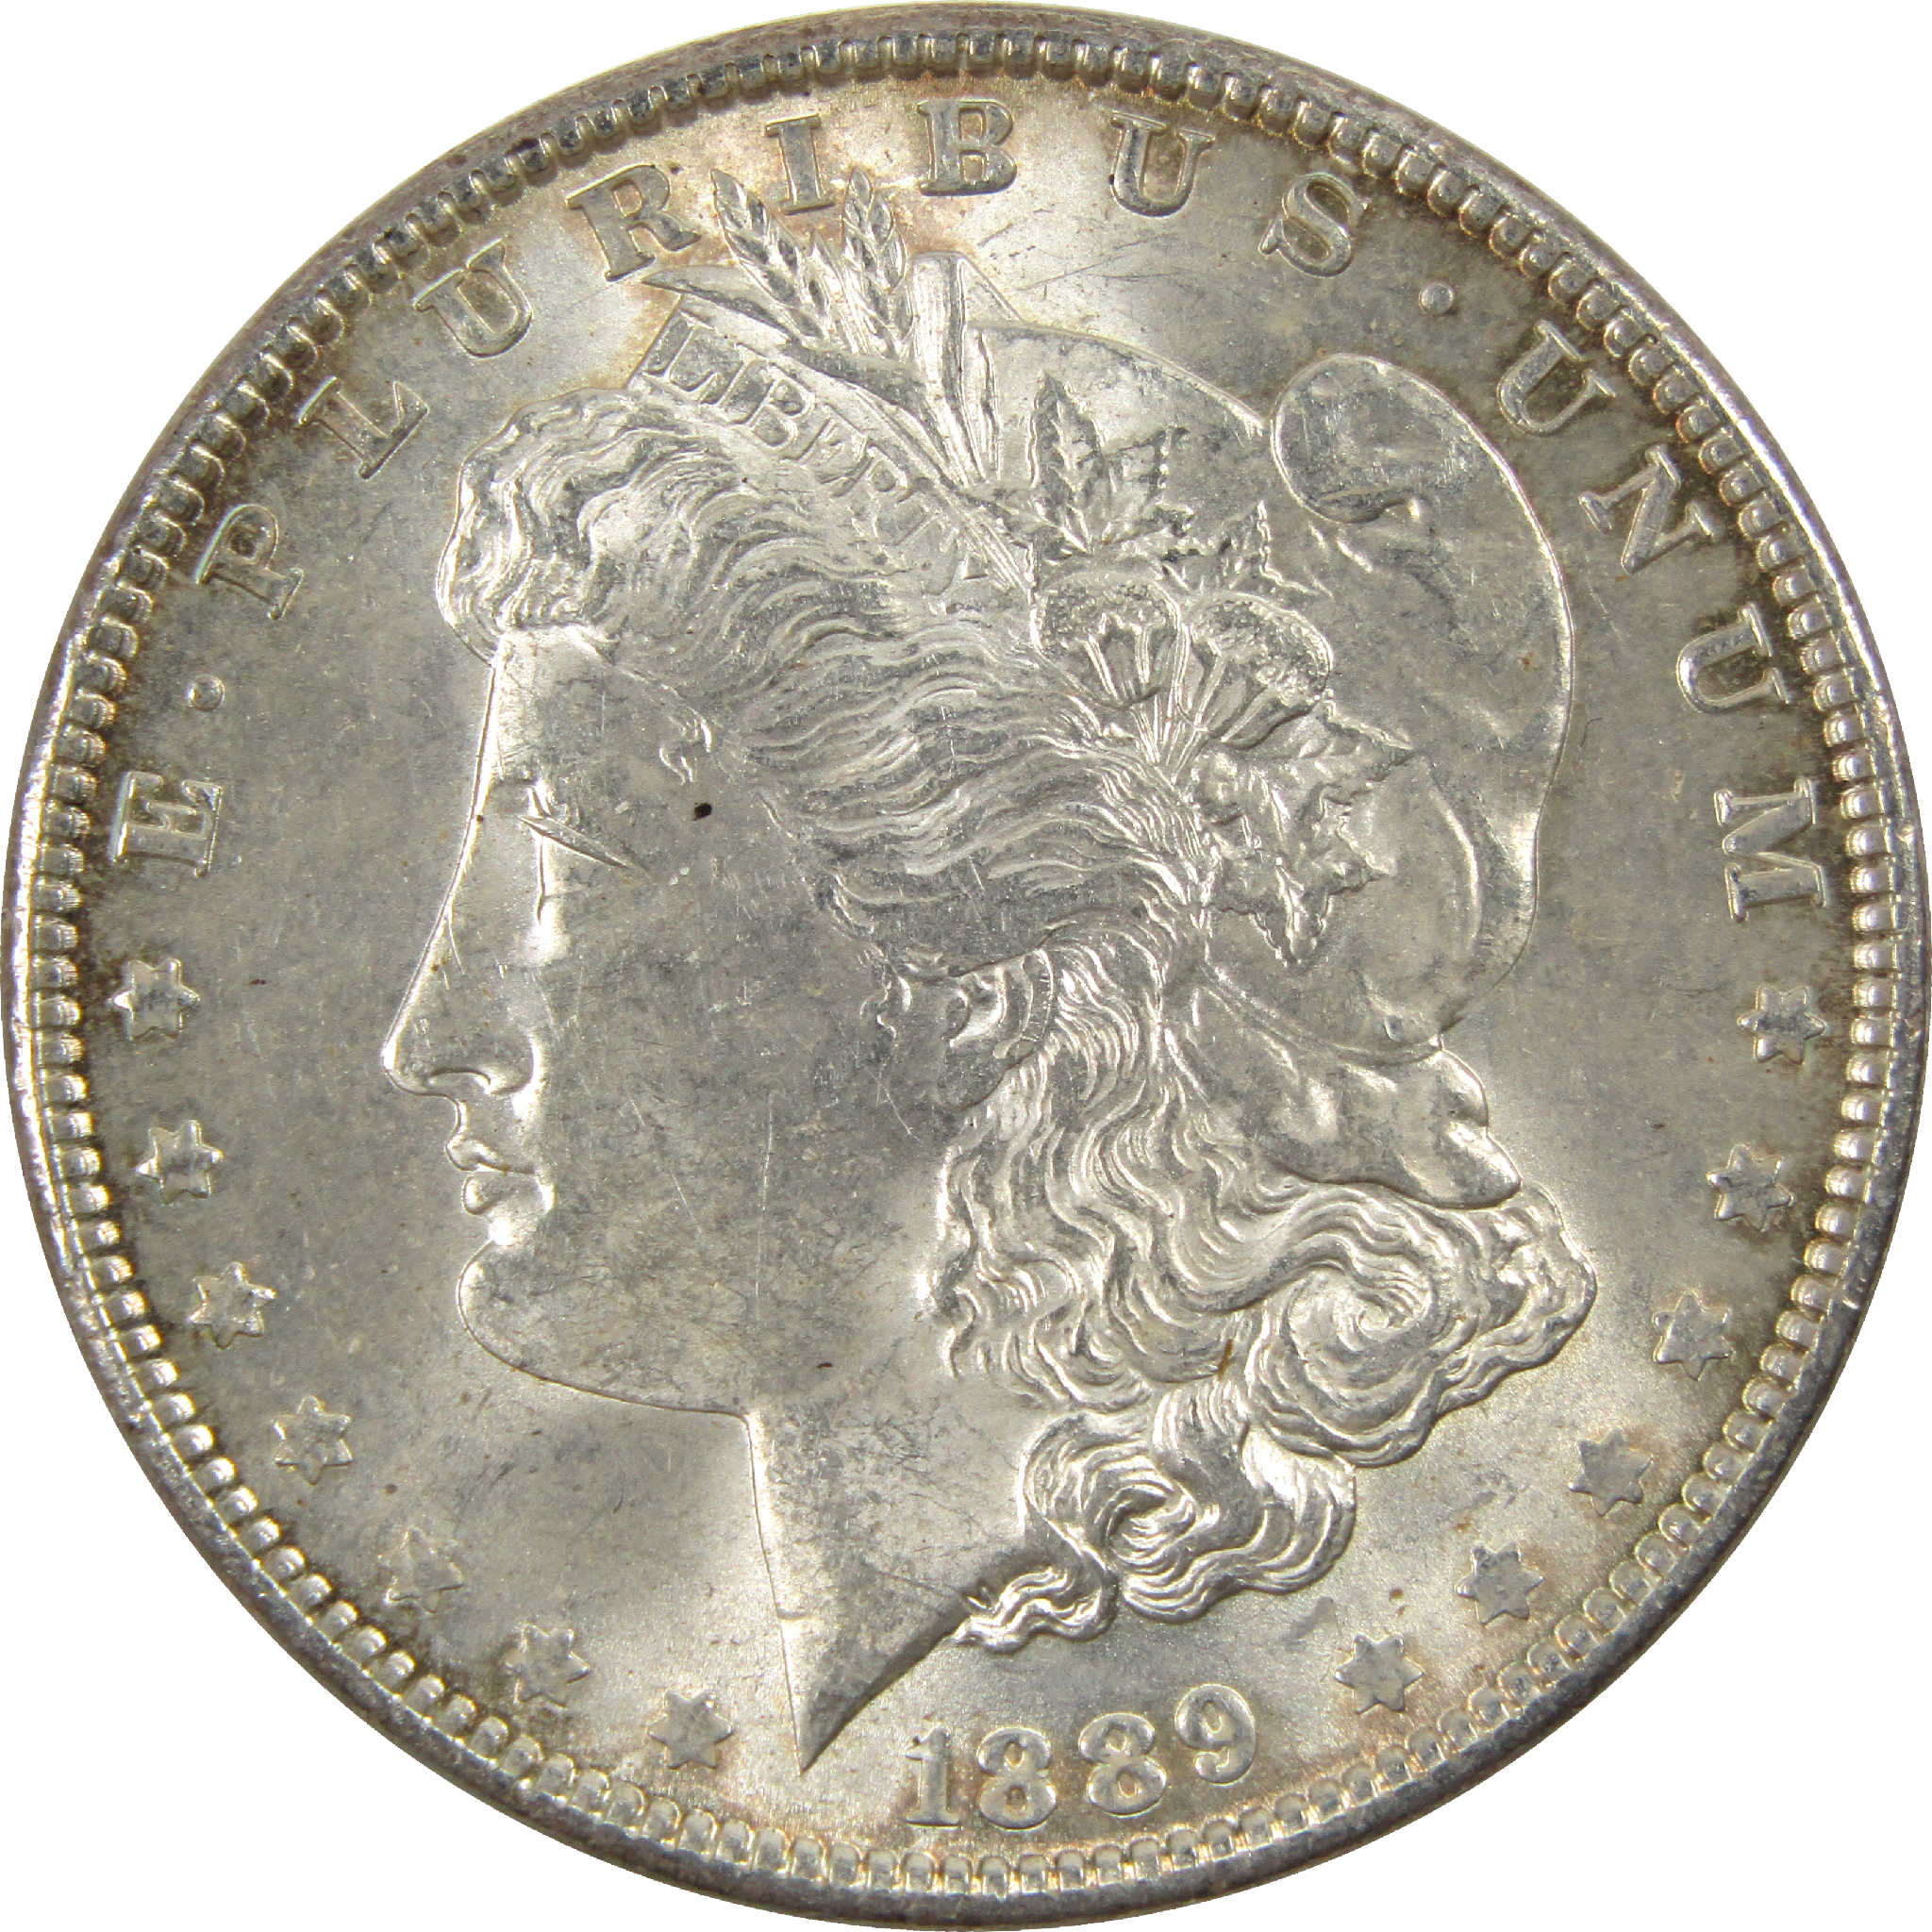 1889 Morgan Dollar CH AU Choice About Uncirculated Silver $1 Coin - Morgan coin - Morgan silver dollar - Morgan silver dollar for sale - Profile Coins &amp; Collectibles